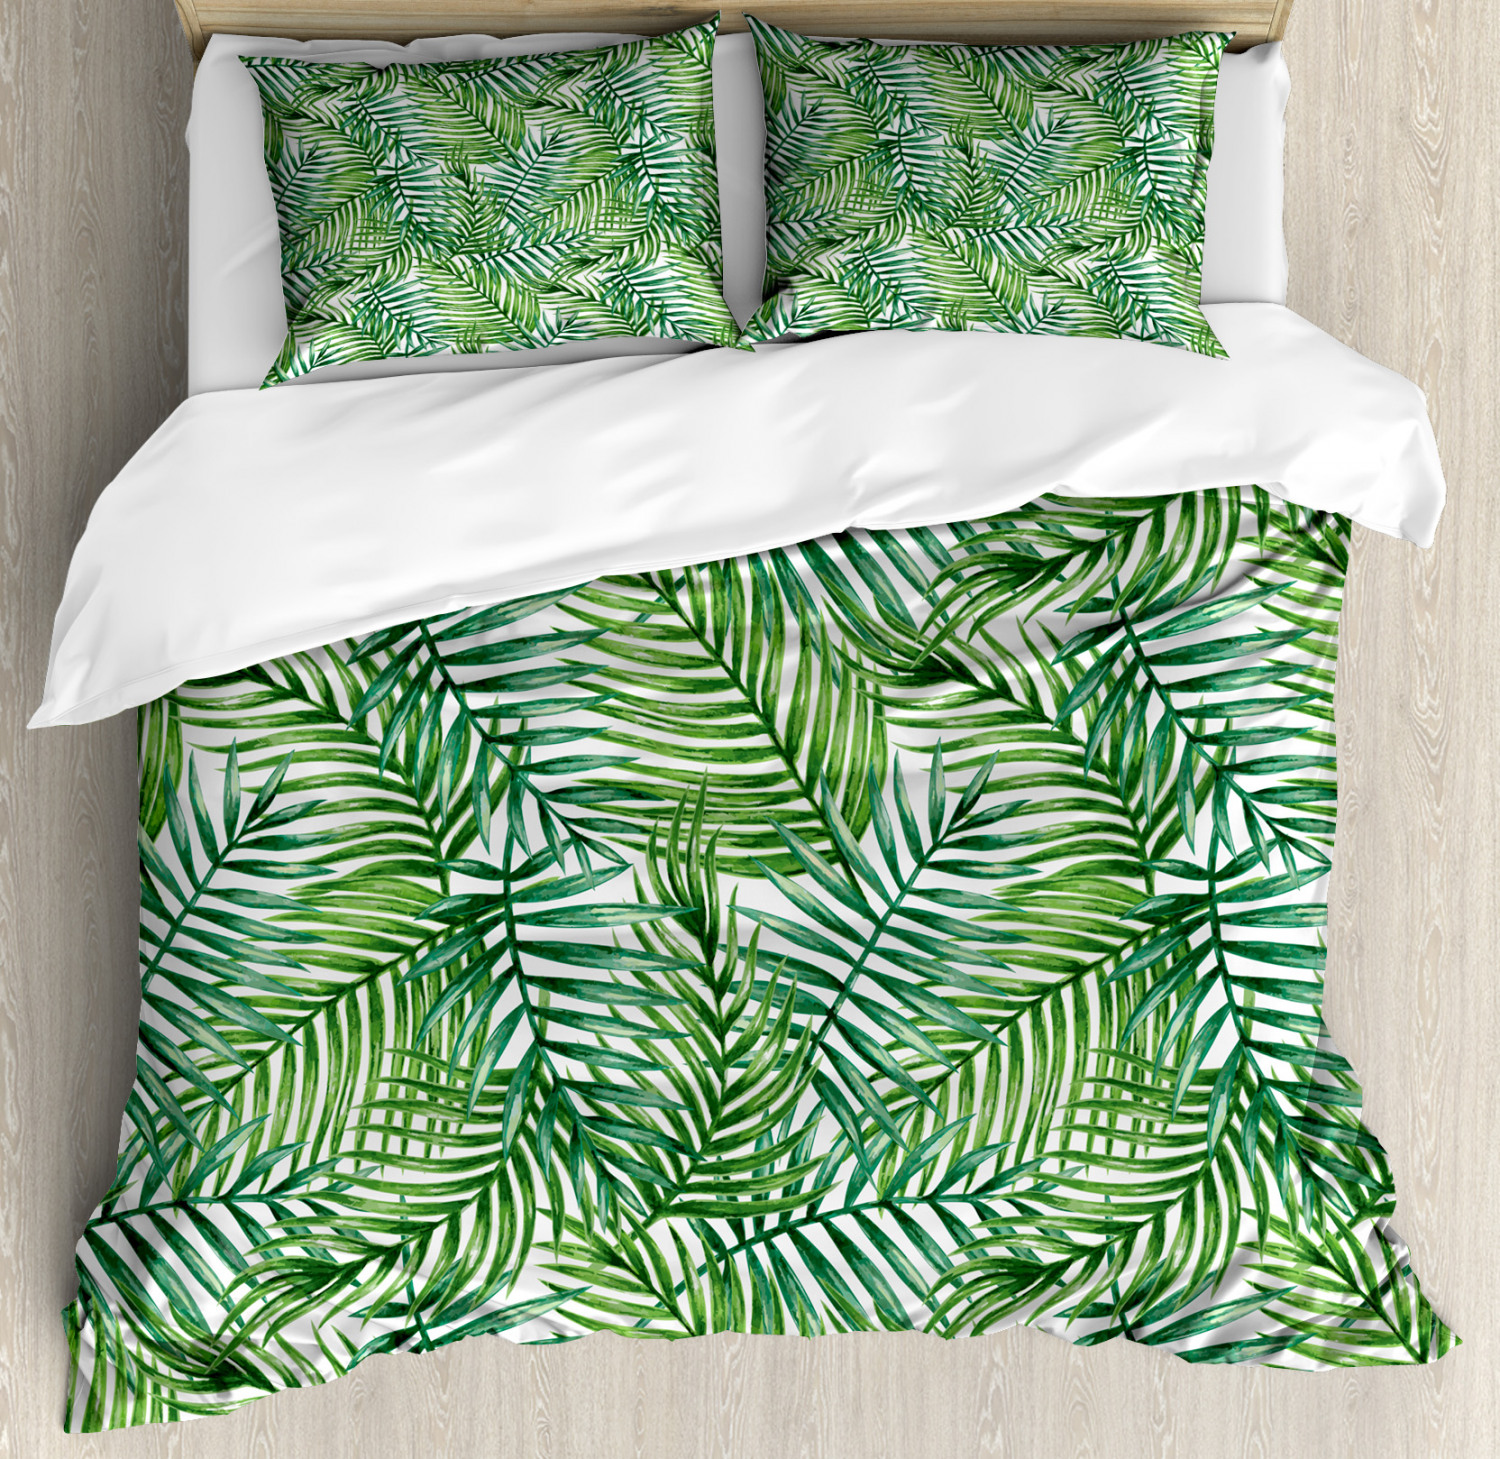 Leaf Duvet Cover Set With Pillow Shams Botanical Wild Palm Trees